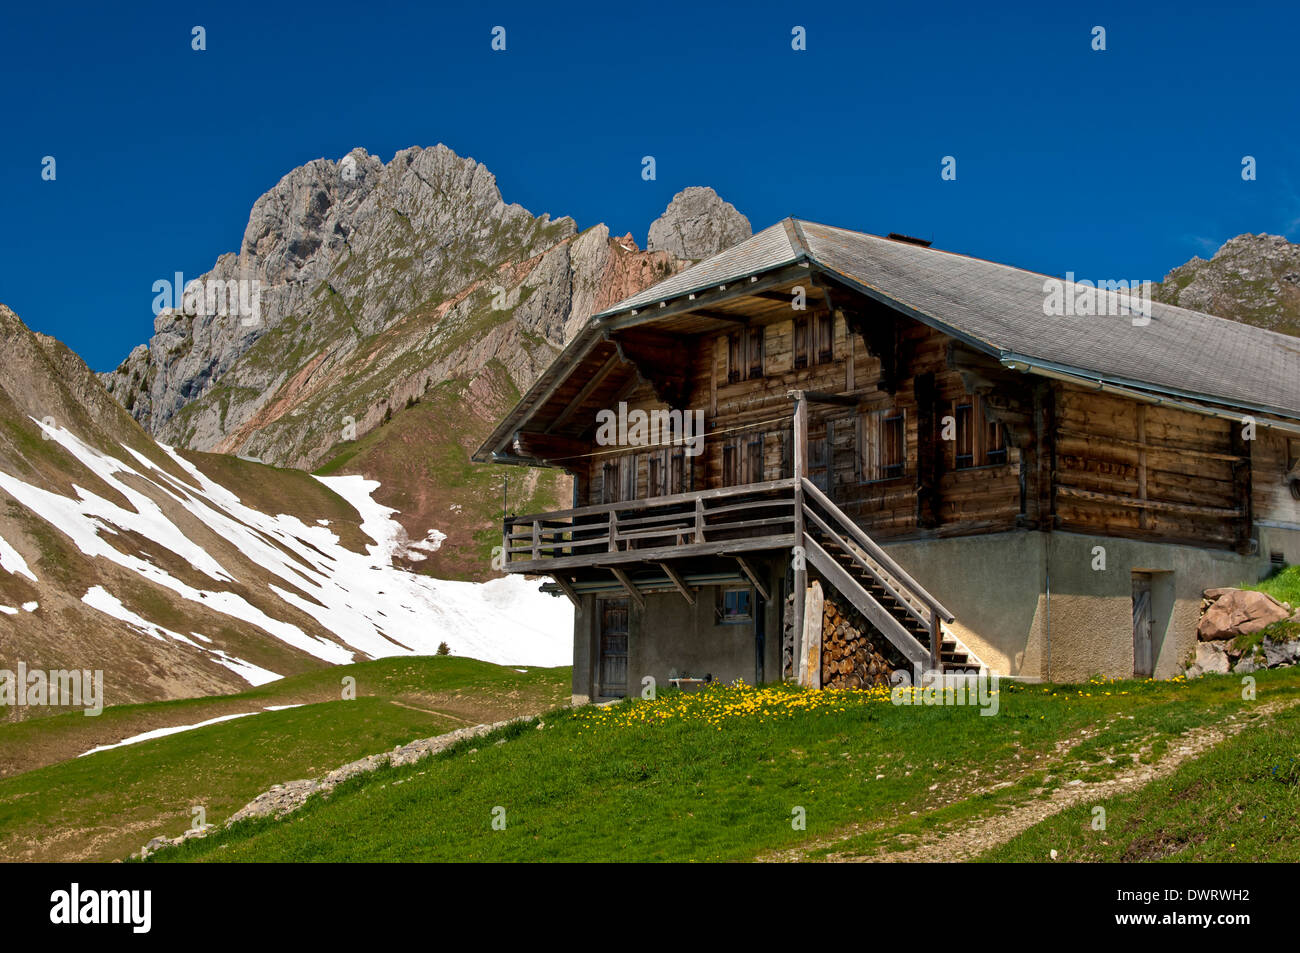 Alp cabin at the foot of the Dent de Ruth peak in the Gastlosen limestone mountain range, Abländschen, Switzerland Stock Photo